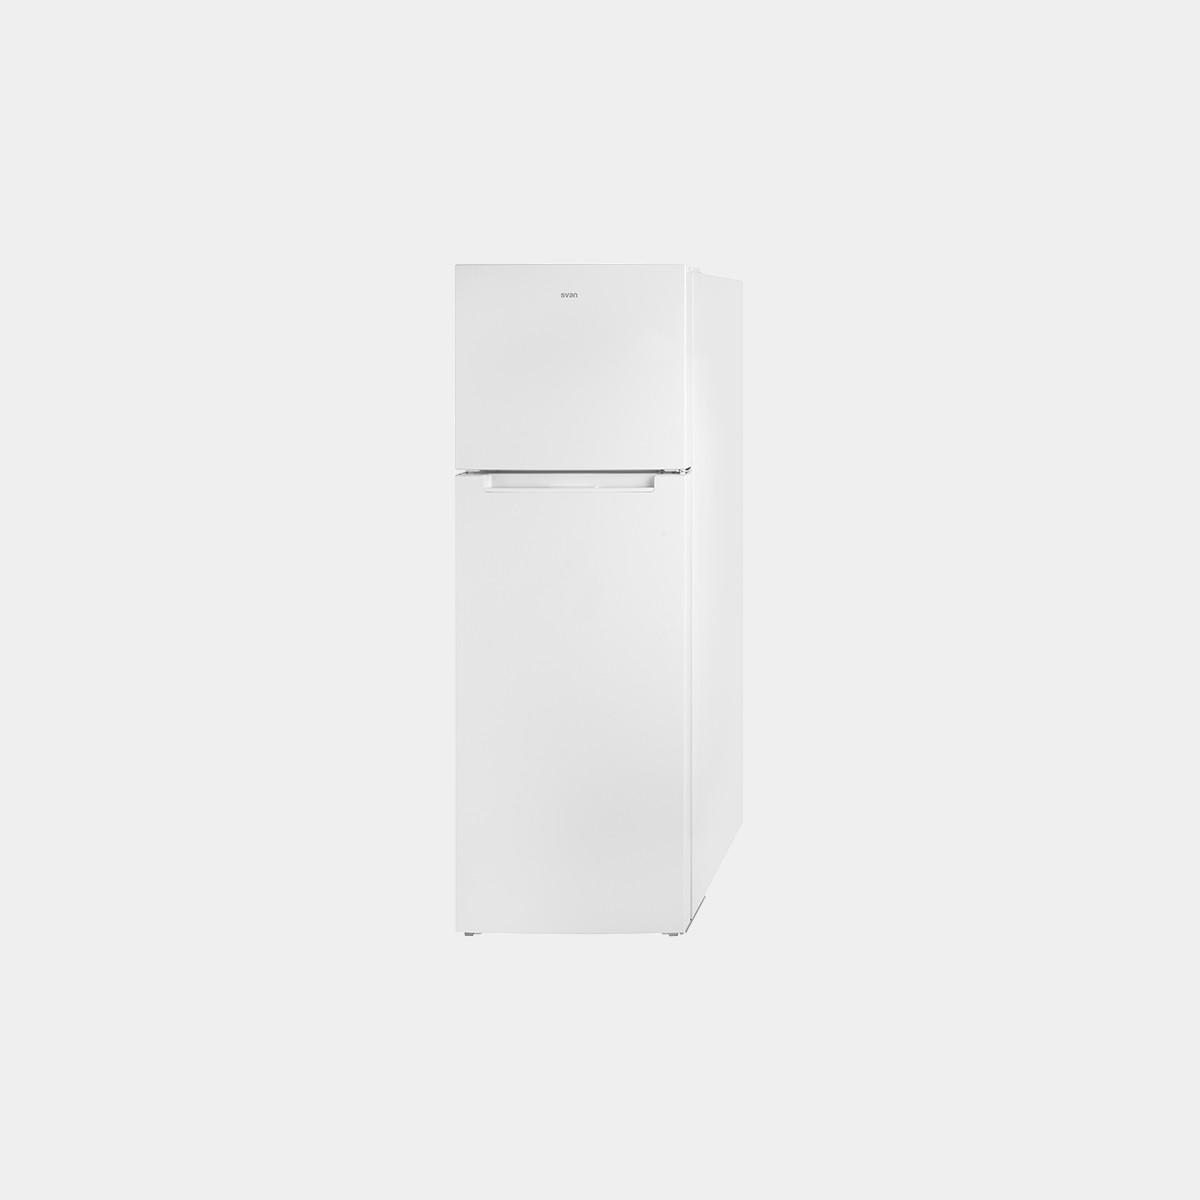 Svan SVF171 frigorifico blanco 173x60 A+